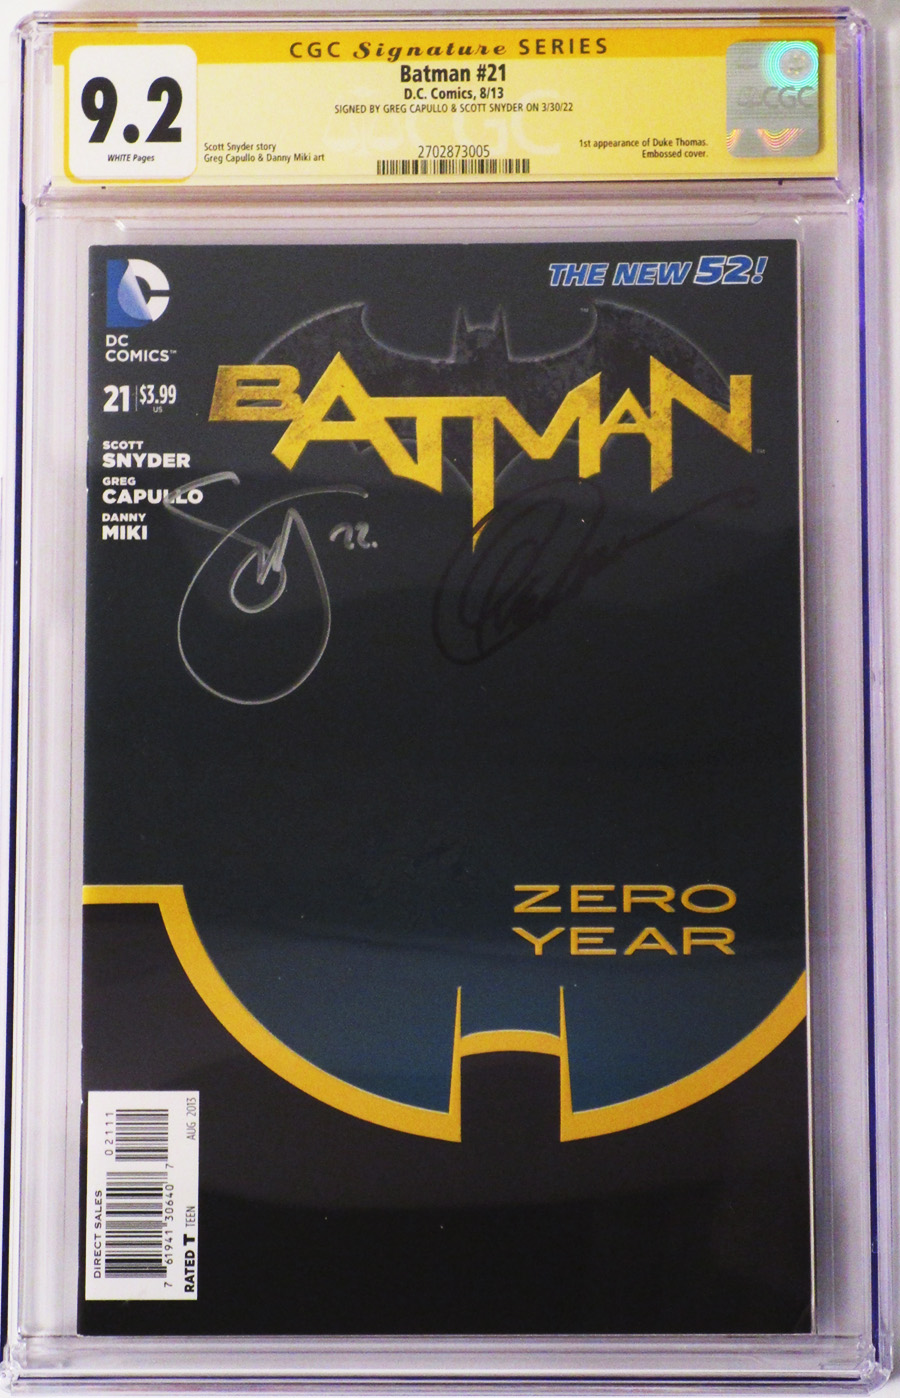 Batman Vol 2 #21 Cover H 1st Ptg Regular Greg Capullo Cover (Batman Zero Year Tie-In) Signed By Scott Snyder and Greg Capullo CGC 9.2